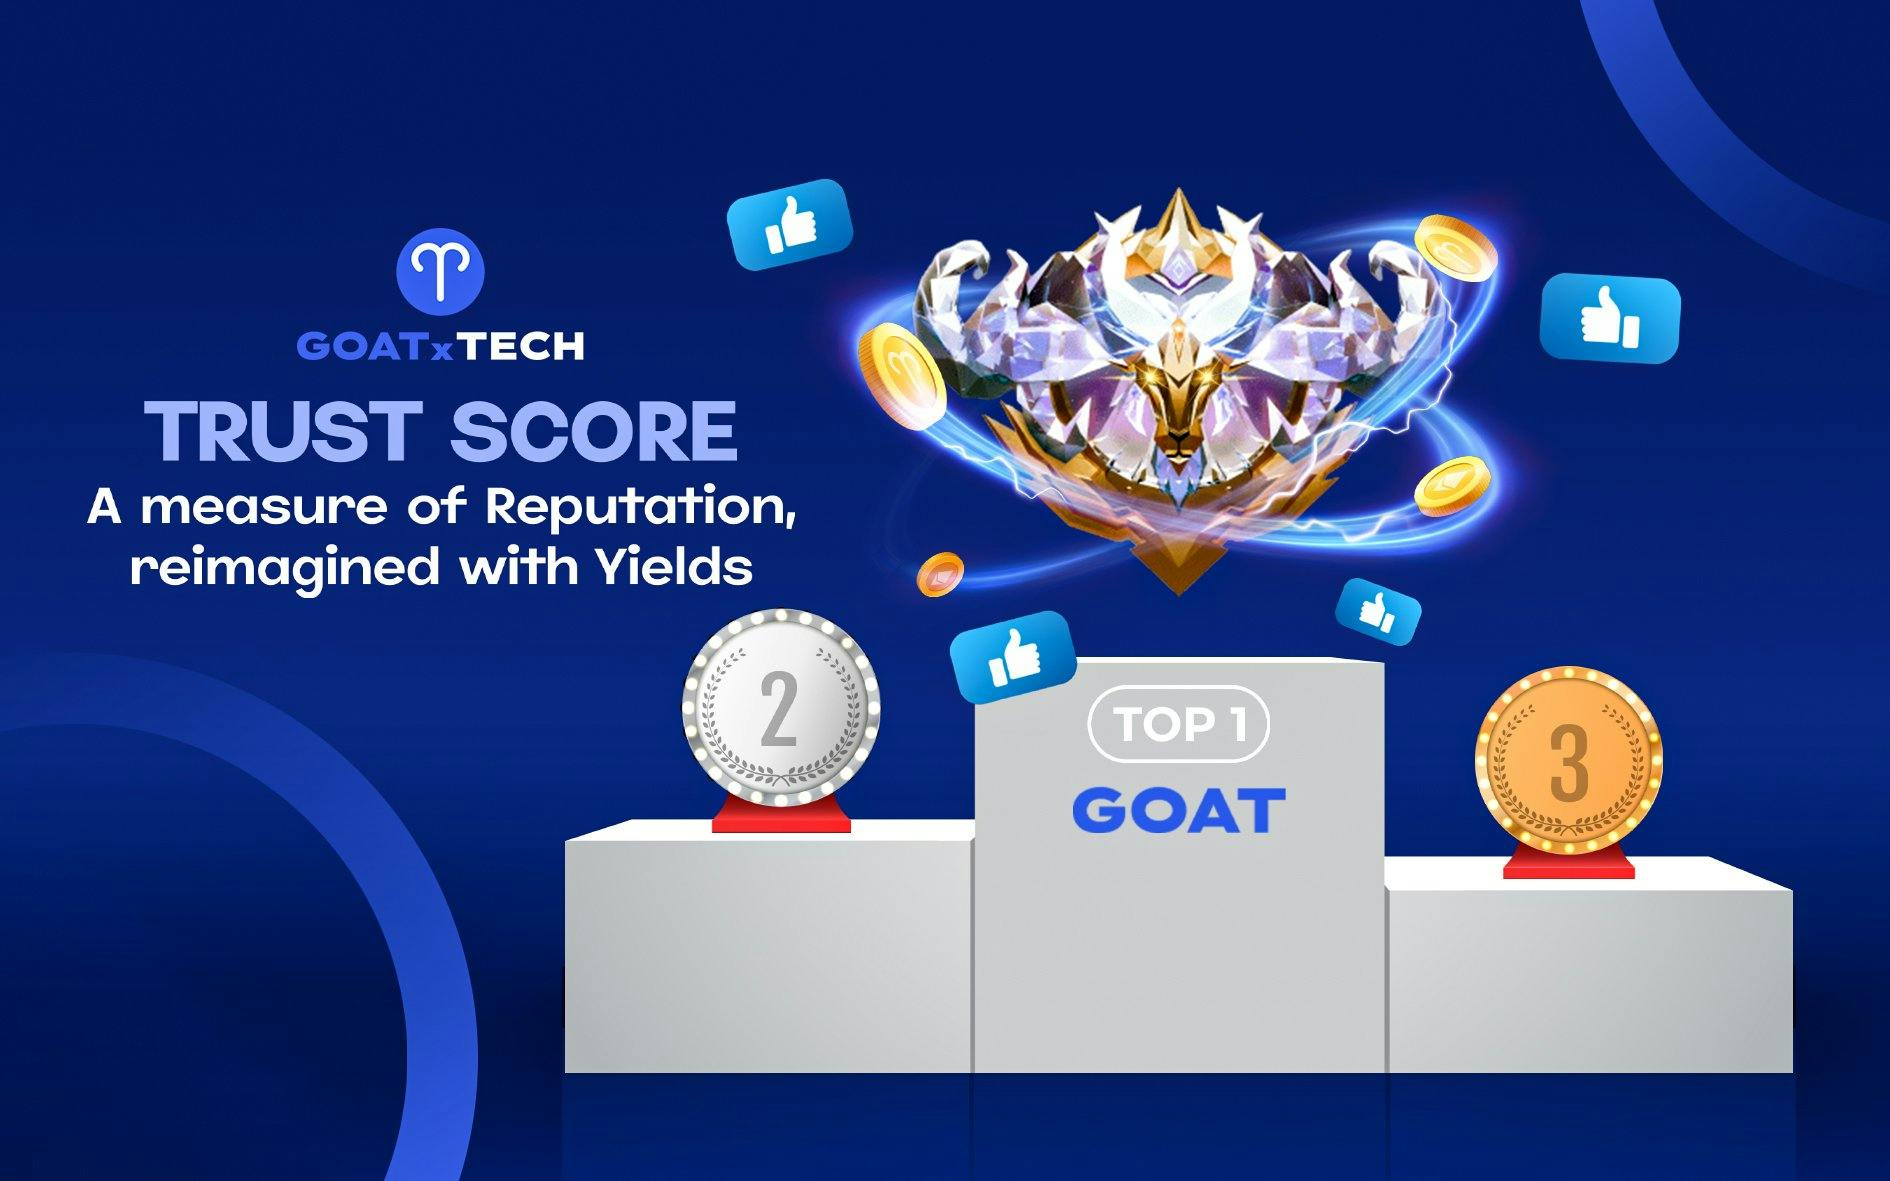 Goat.Tech’s Trust Score is a transparent and verifiable reputation system